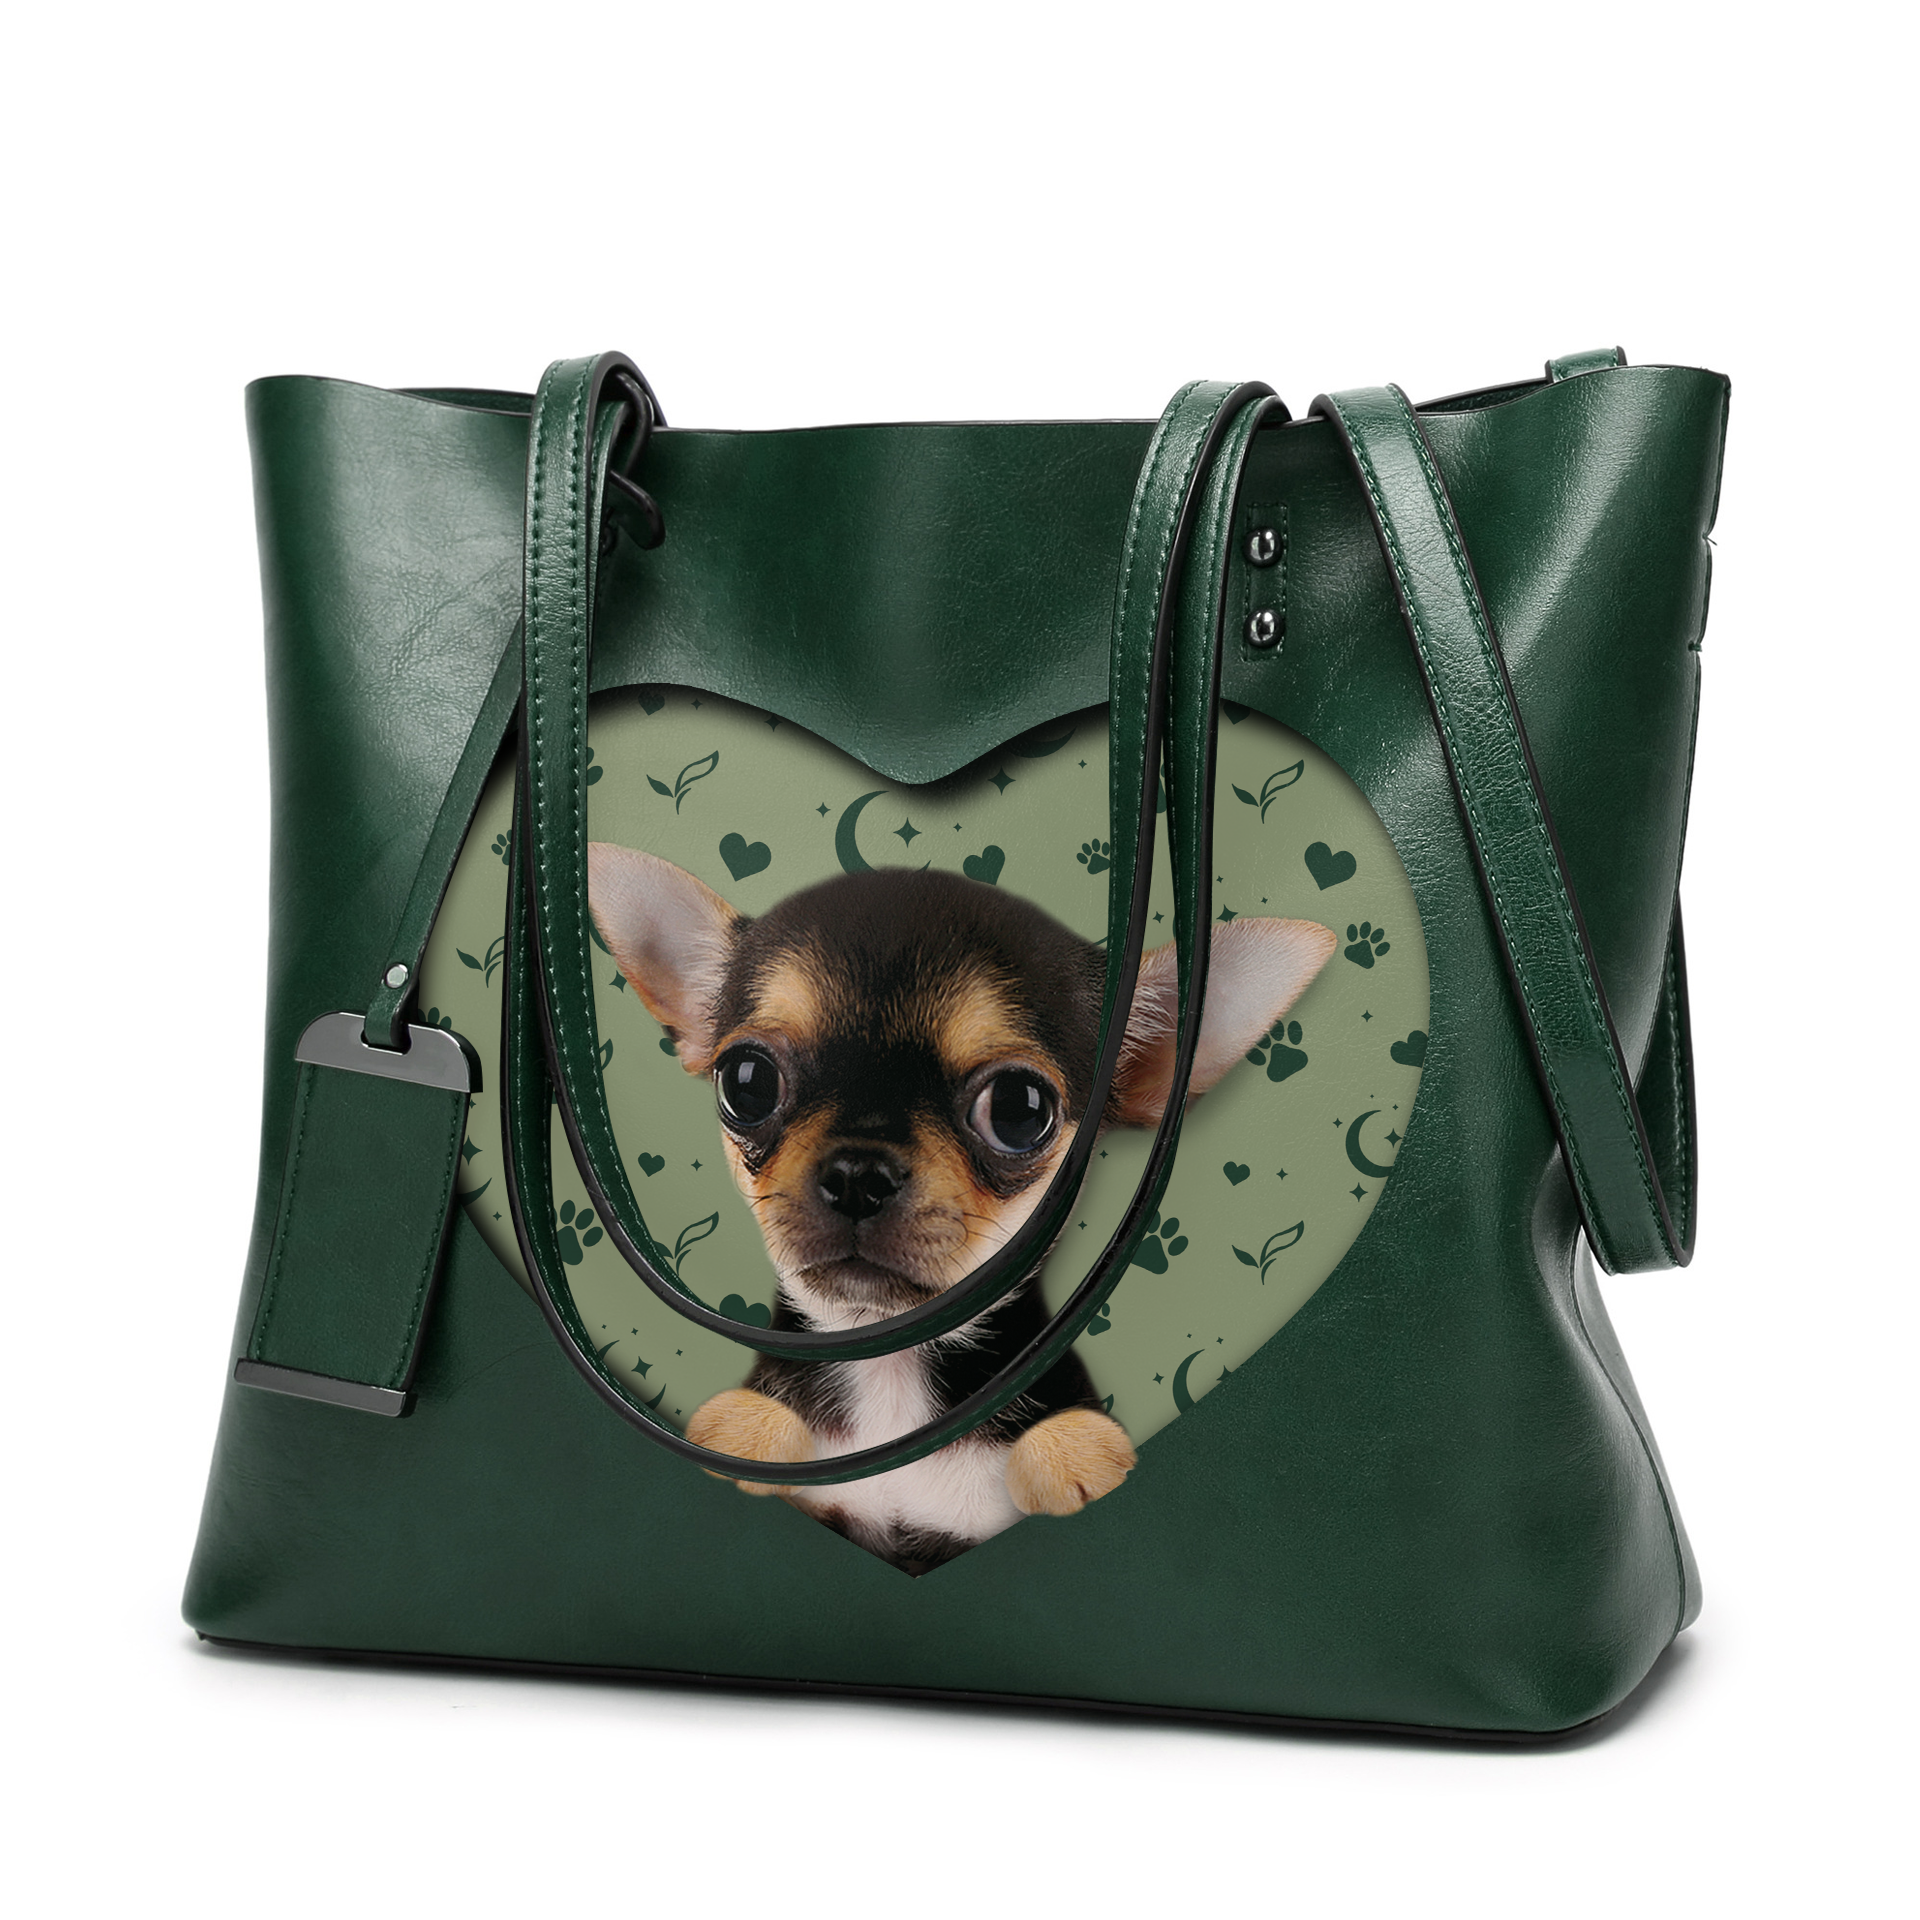 I Know I'm Cute - Chihuahua Glamour Handbag V5 - 10